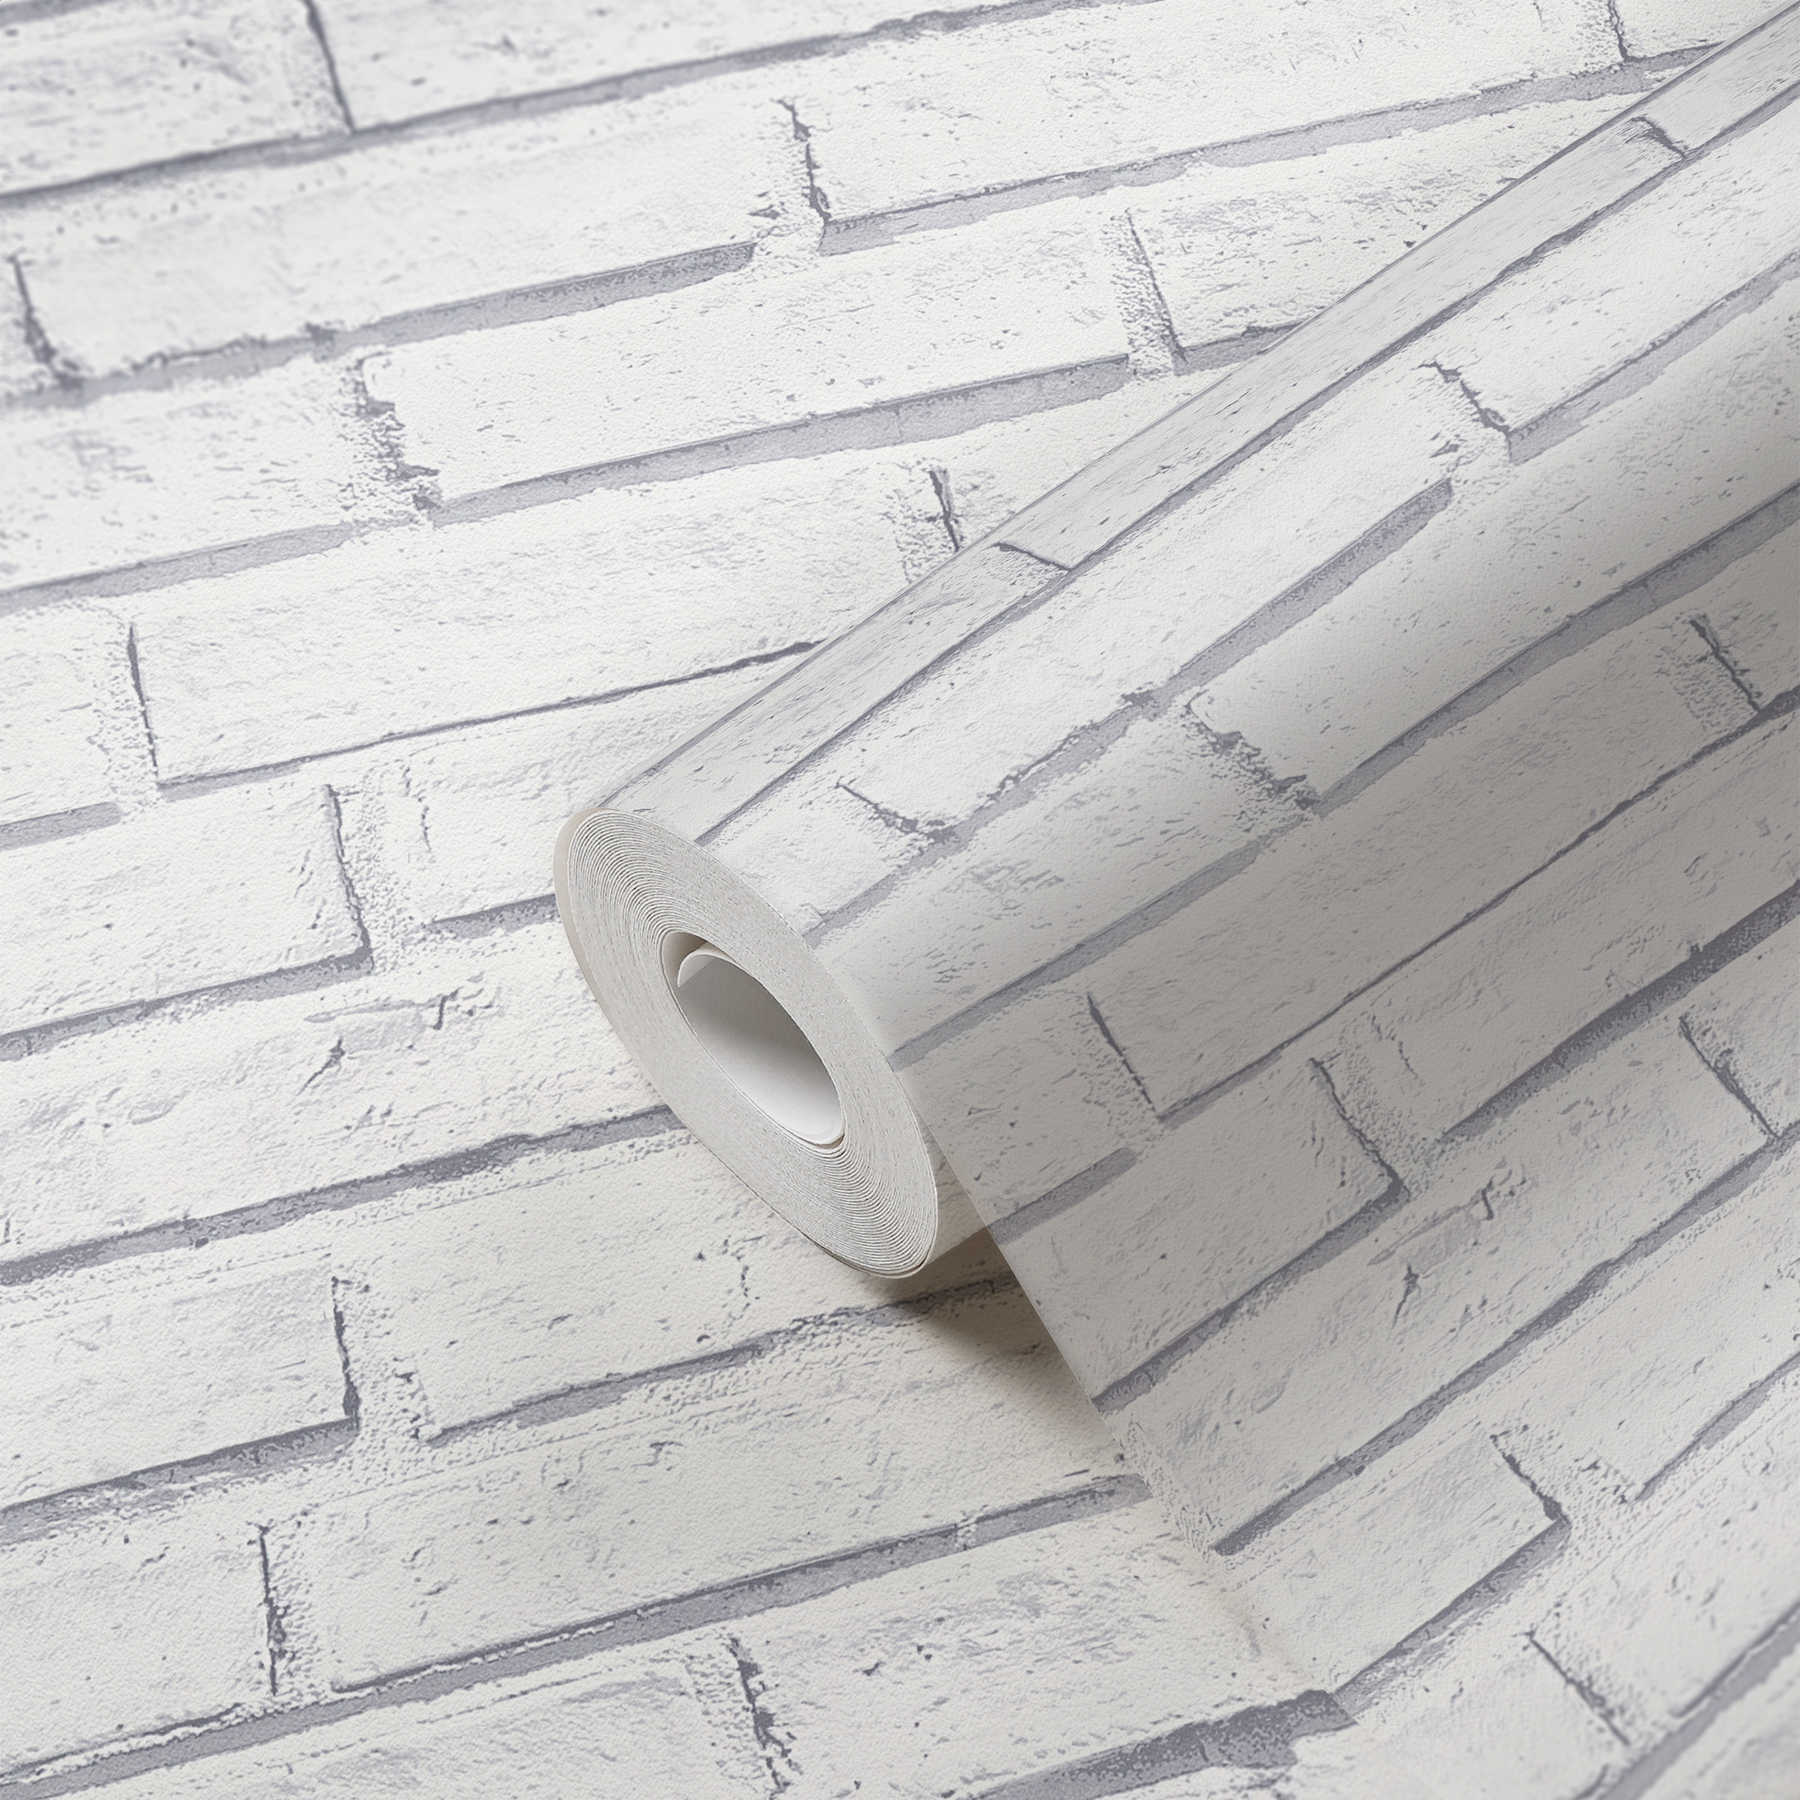             Masonry wallpaper 3D effect,realistic shadows - white, grey
        